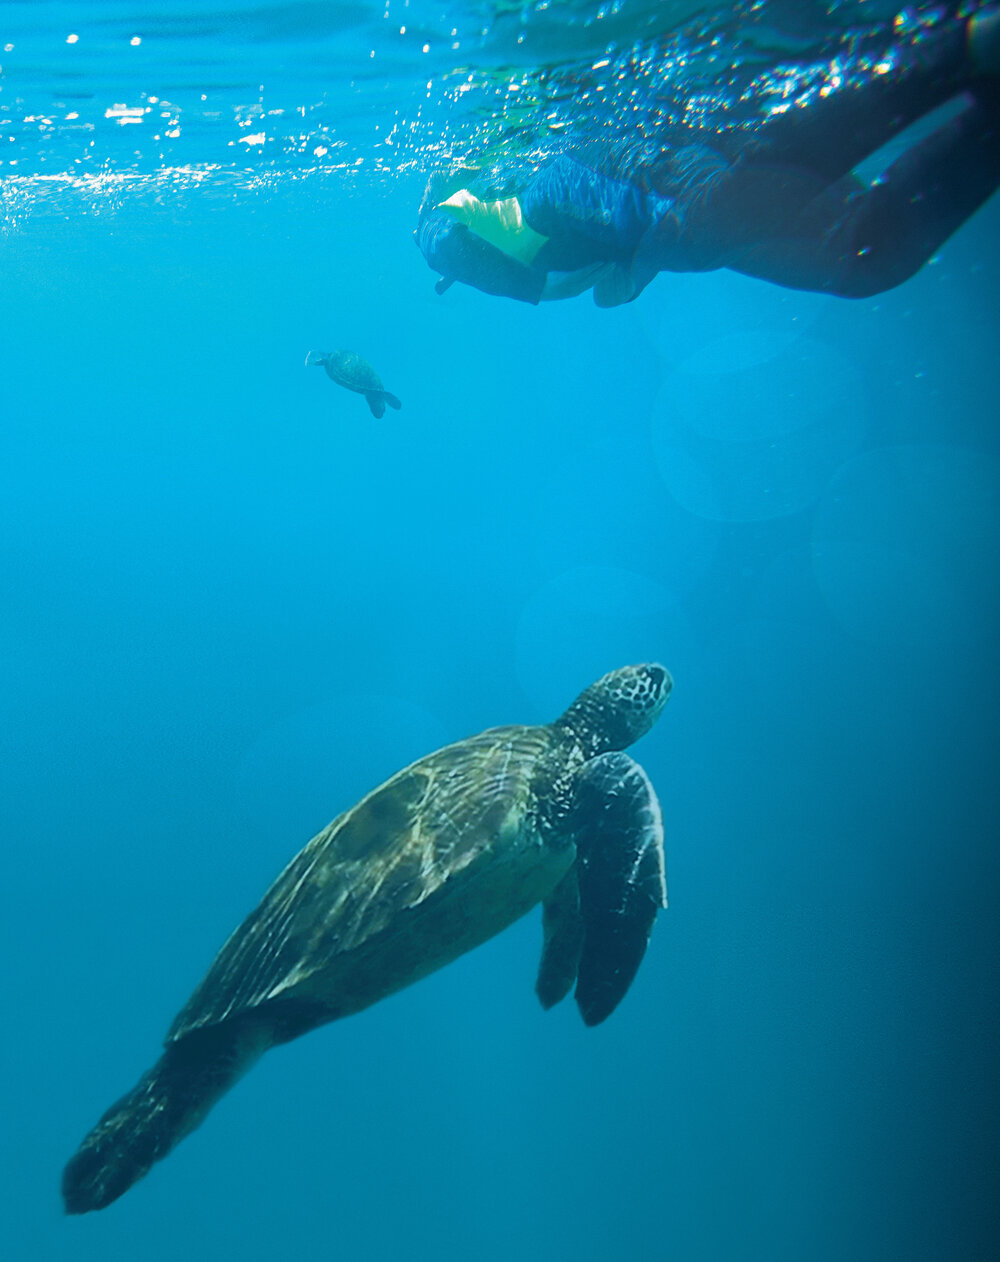 Ecuador Galapagos Snorkelling Traveller Turtle-Attit Patel 2010-1004 Composite Lg RGB.jpg